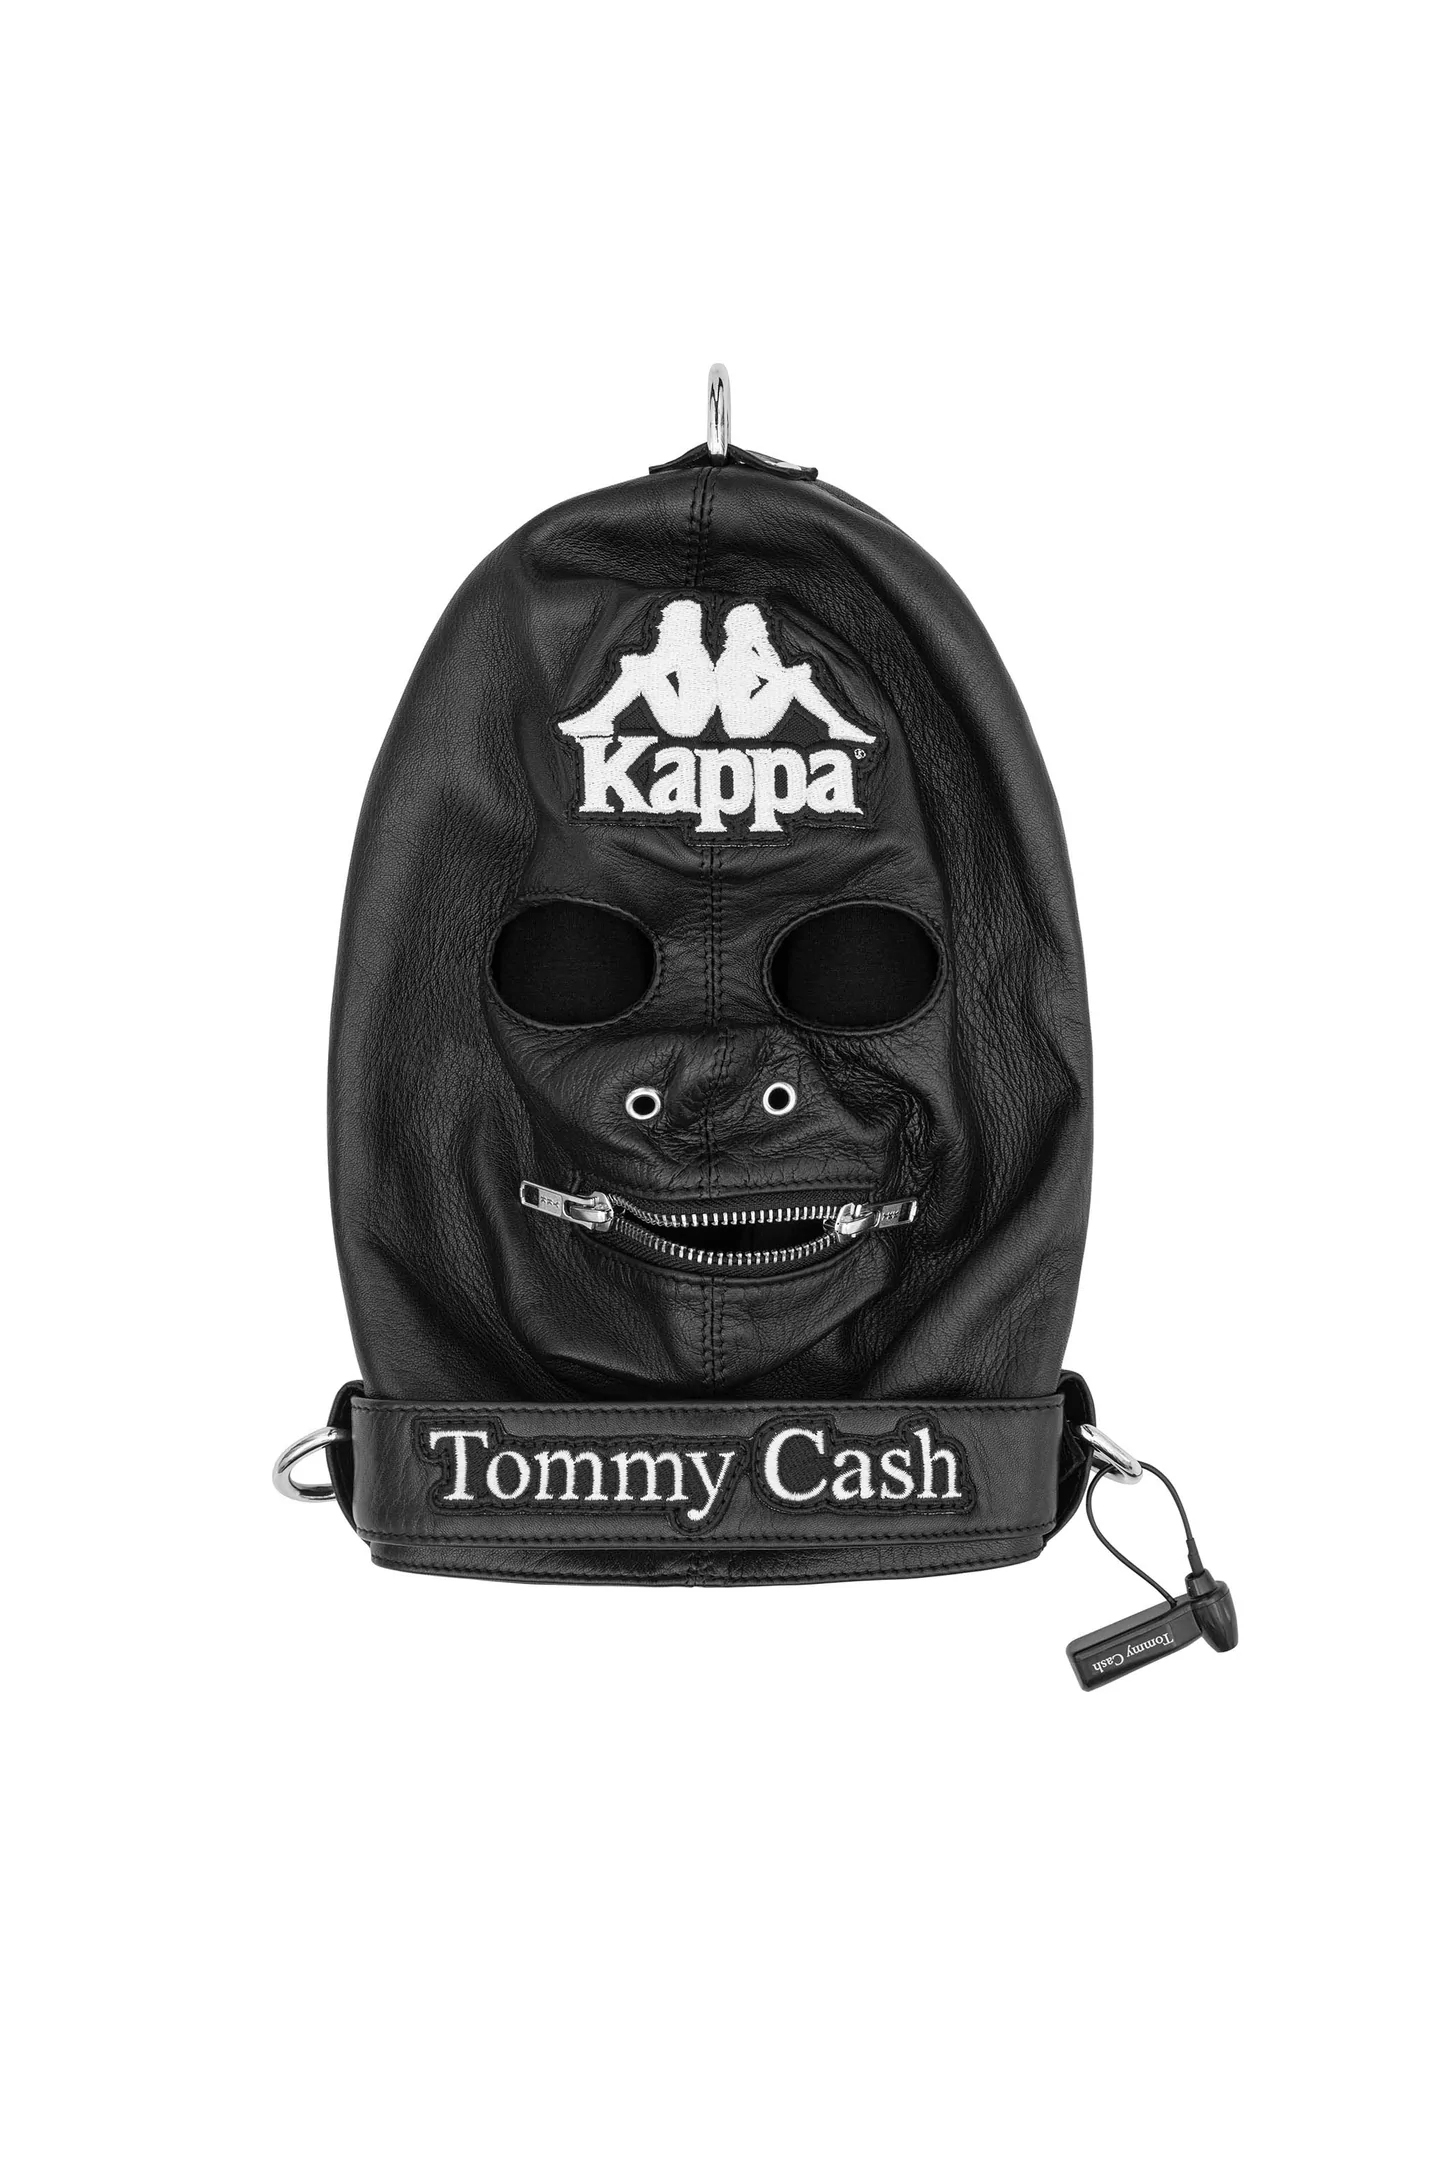 Kappa x Tommy Cash 推出联名系列